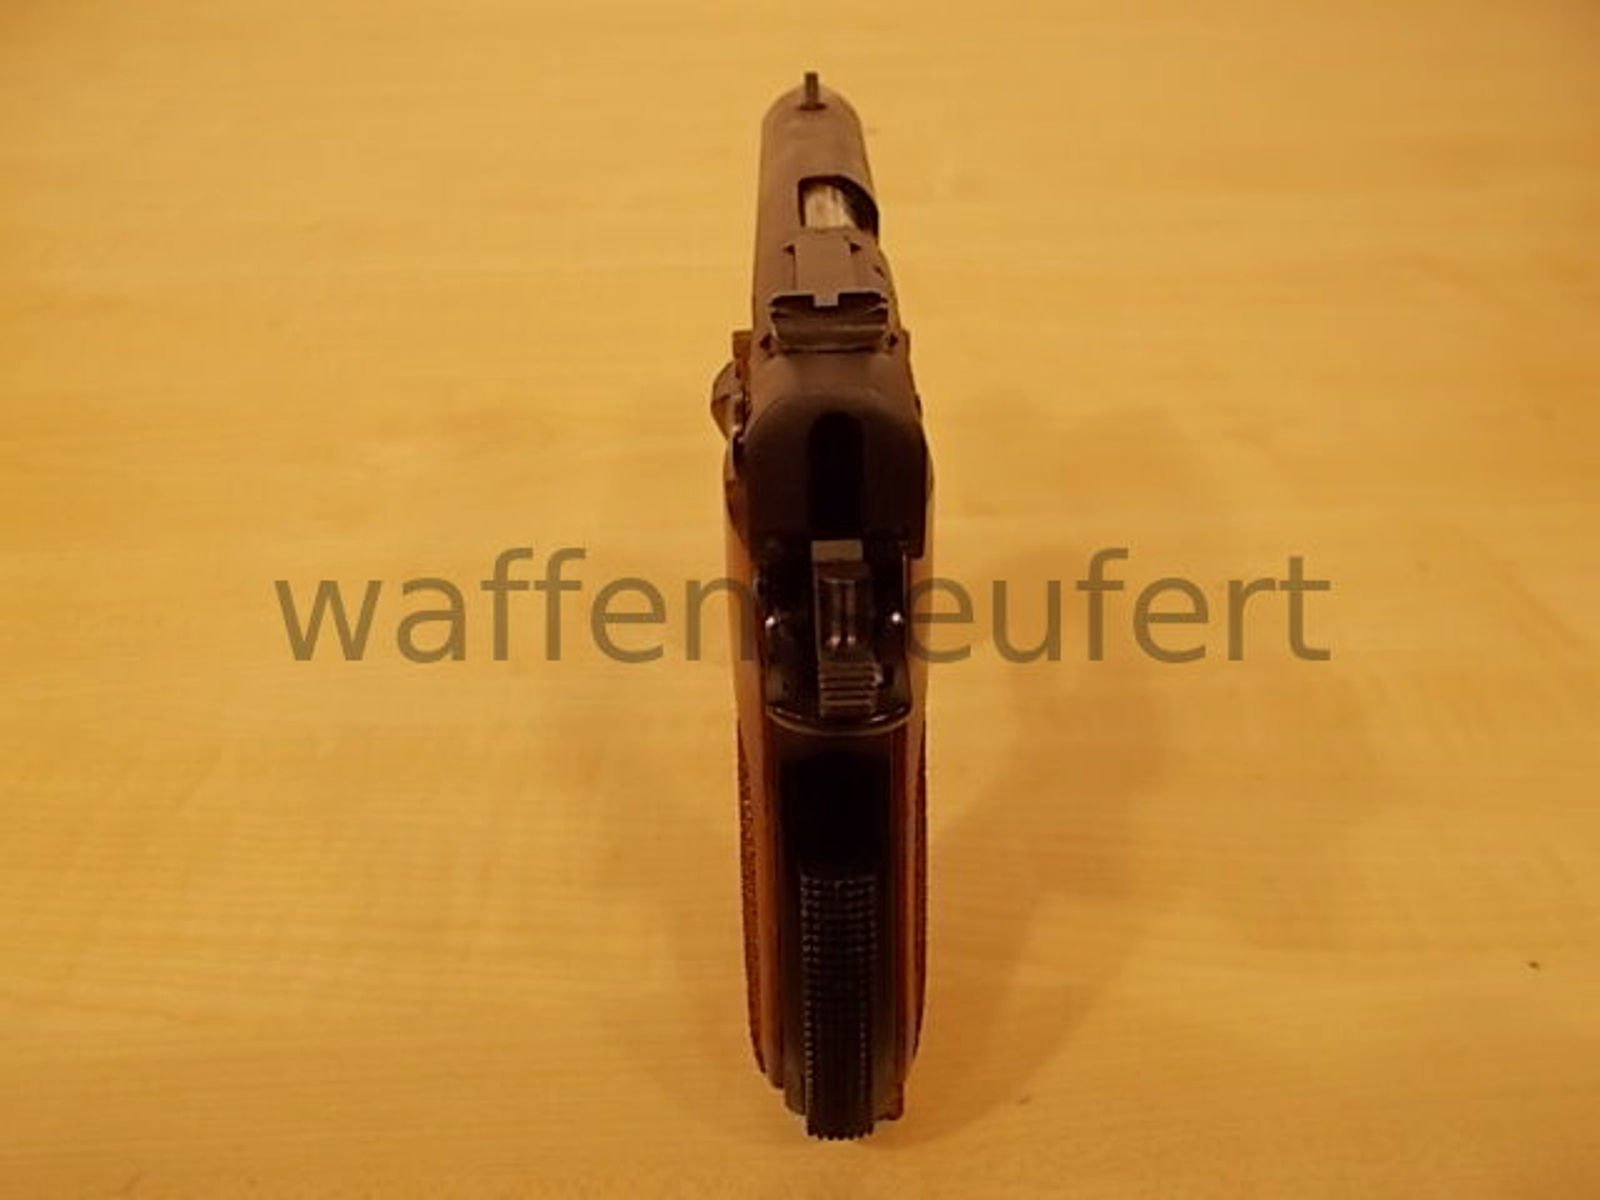 Smith & Wesson M39-2 Pistole